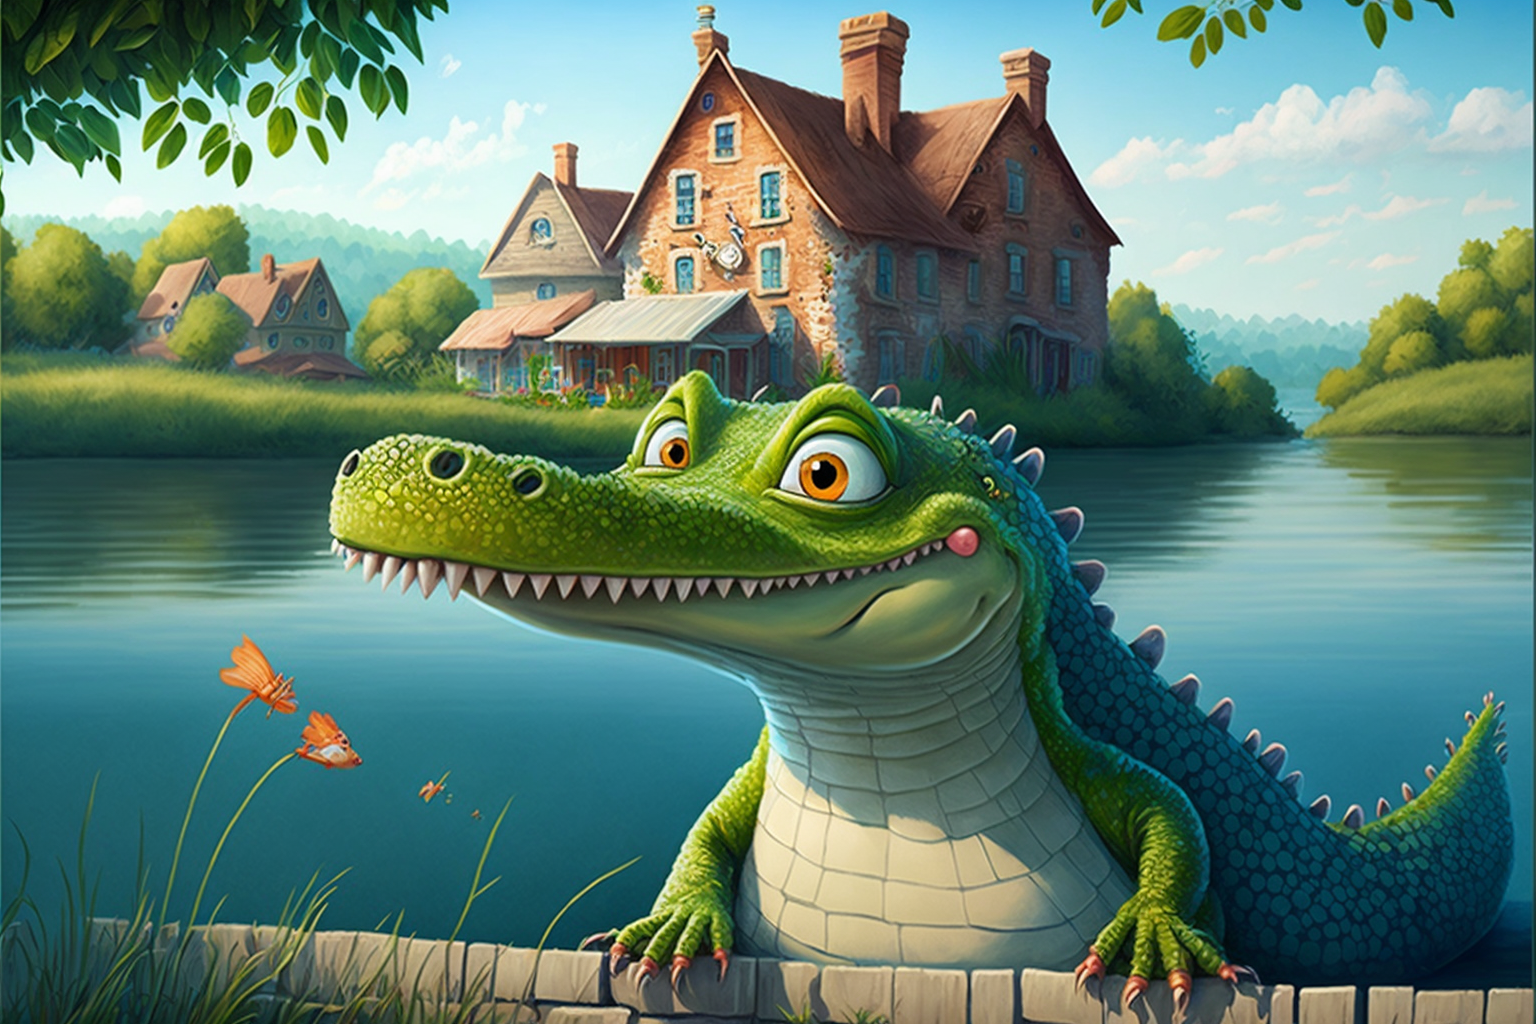 The Kind-Hearted Crocodile and Alligator